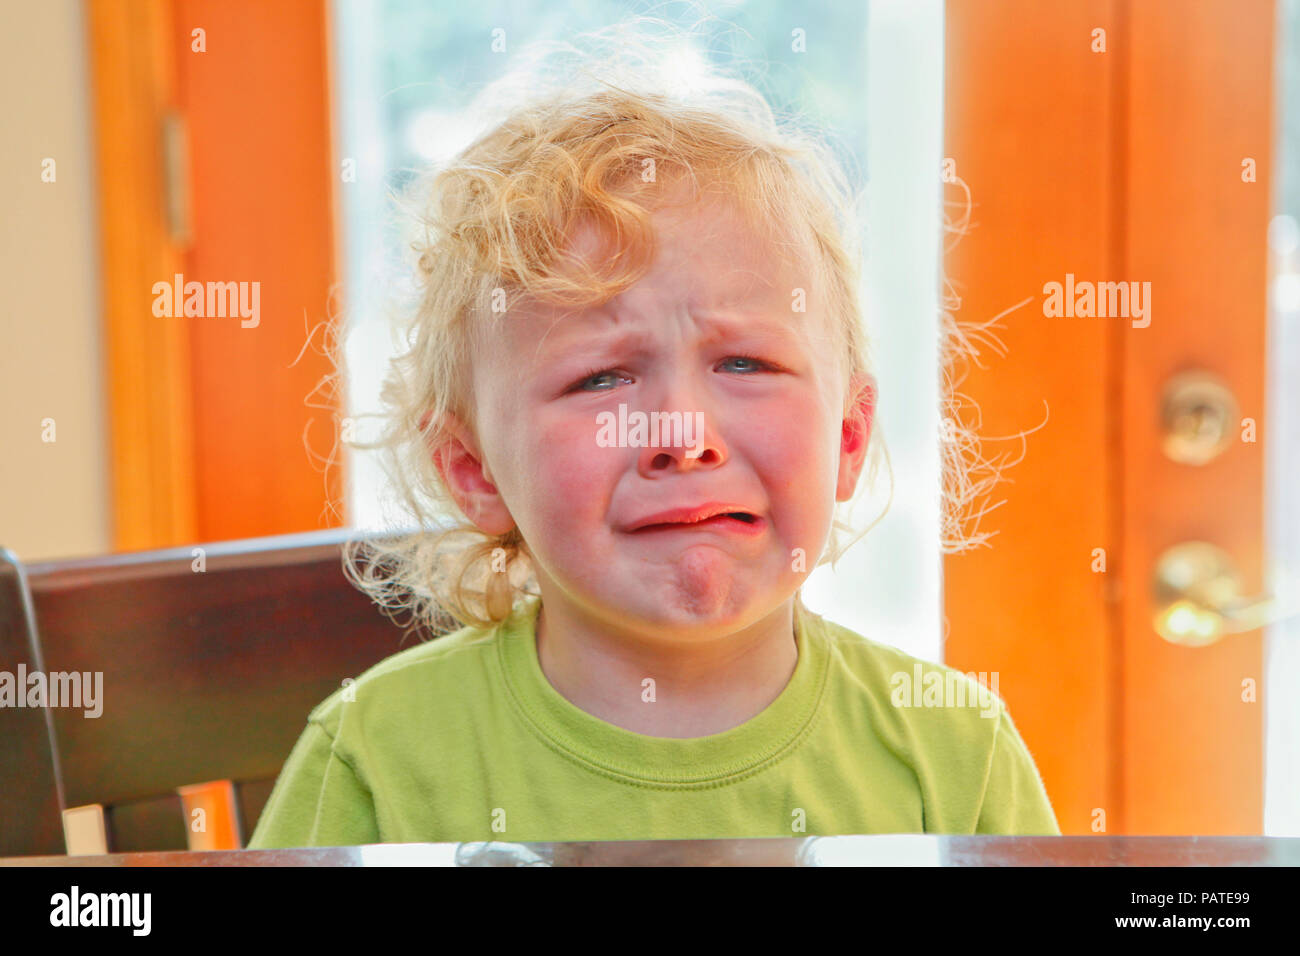 Very sad, crying child Stock Photo